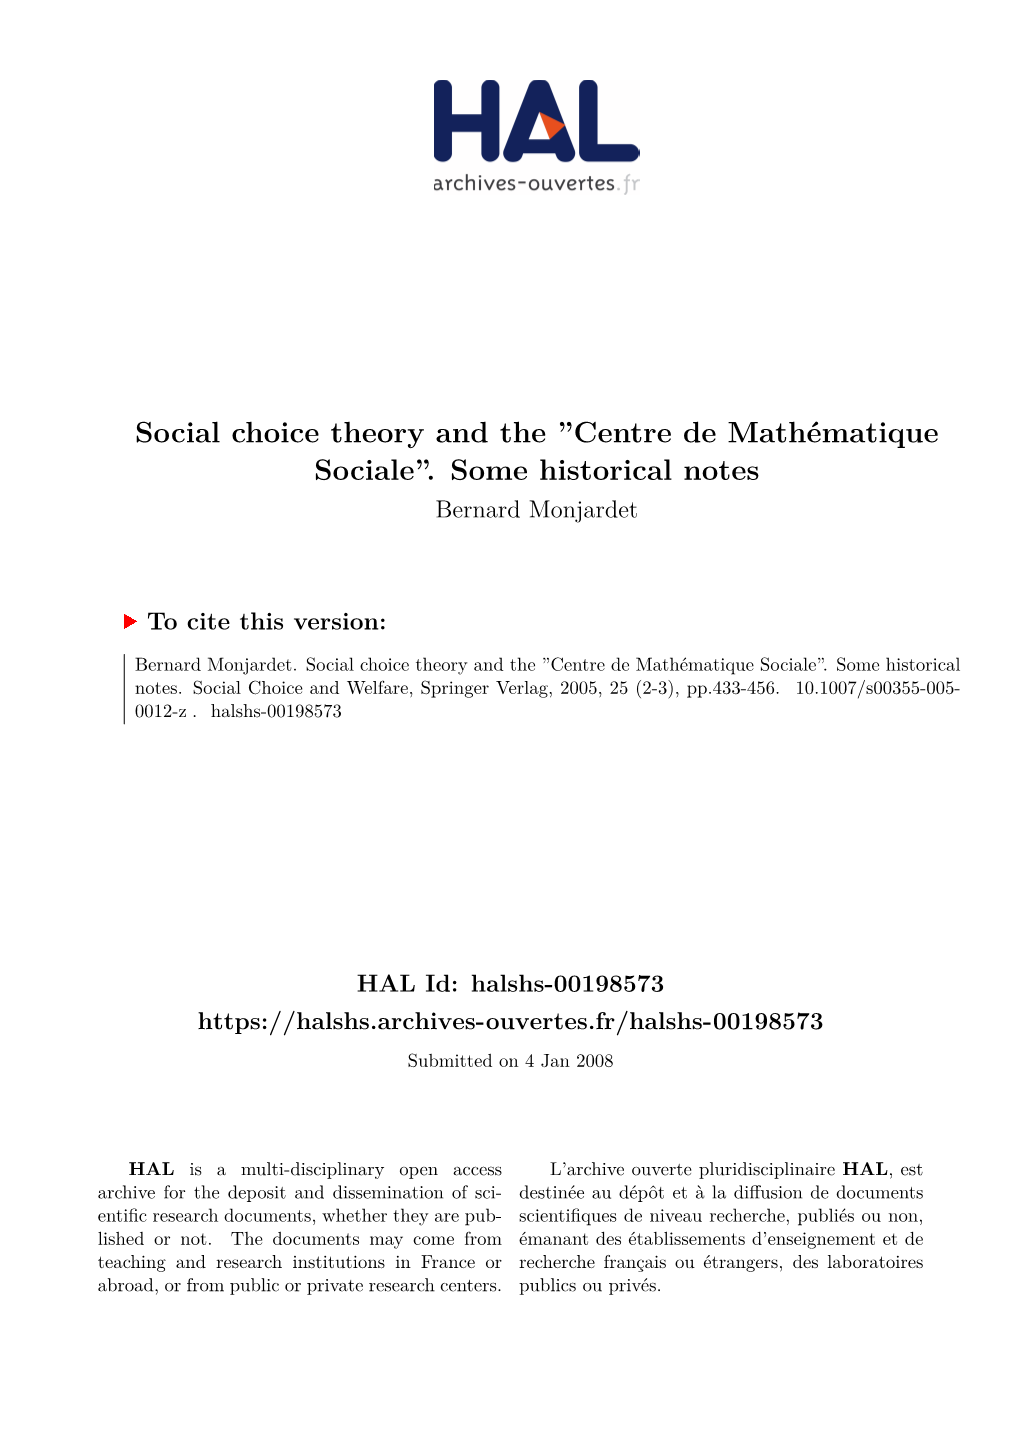 Social Choice Theory and the ”Centre De Mathématique Sociale”